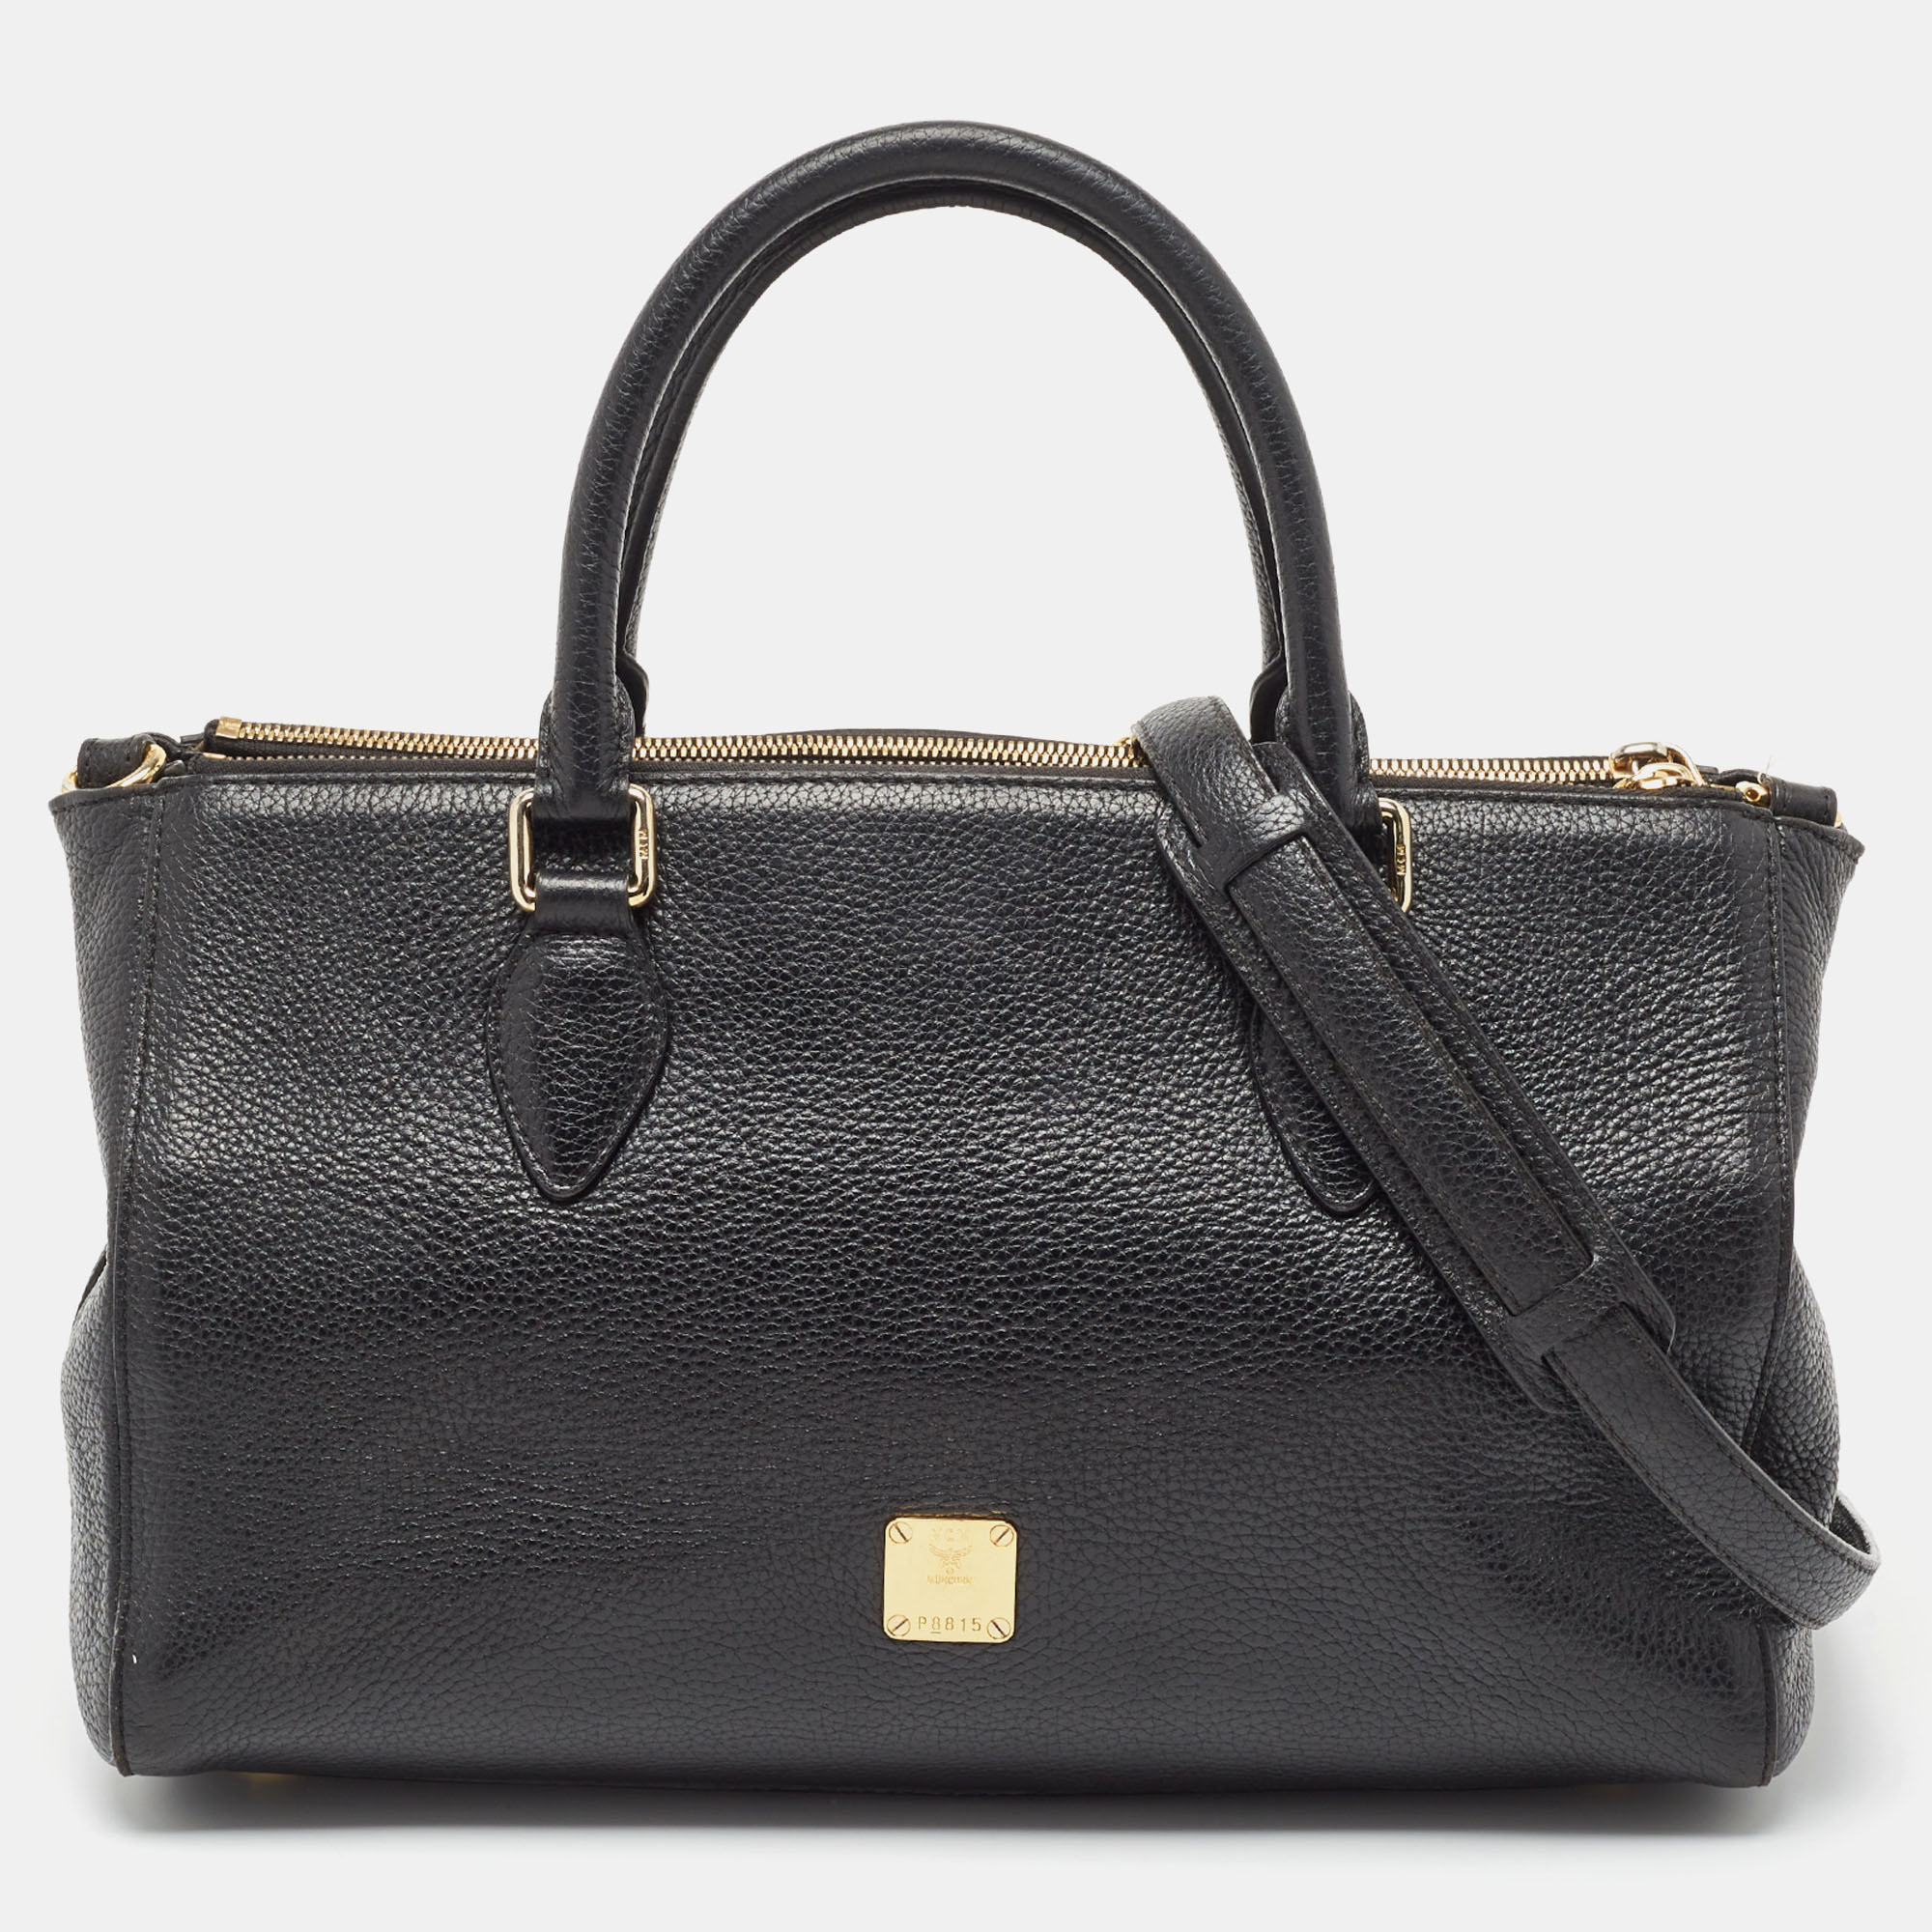 Mcm black leather double zip satchel